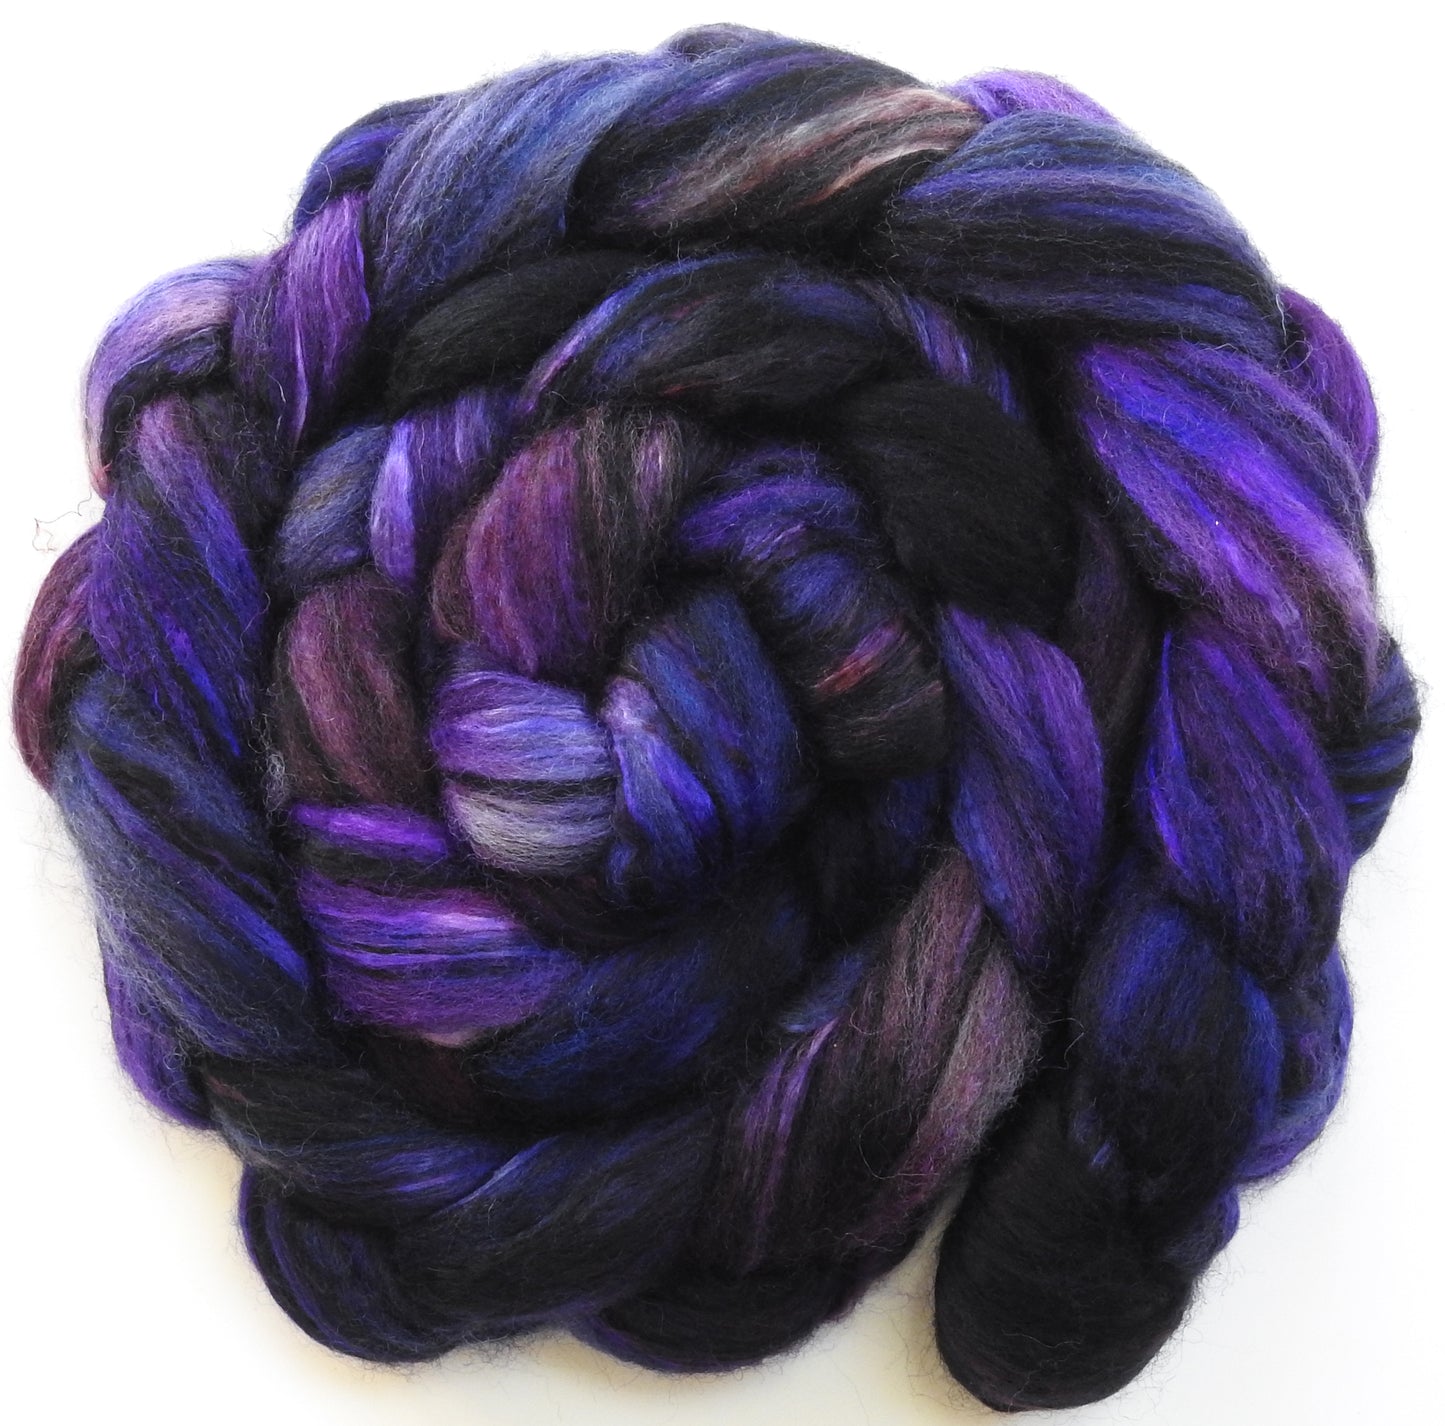 Purple People Eater (5.3 oz) - Batt in a Braid #55- Shetland/ Mulberry Silk/ Black Bamboo (50/25/25)